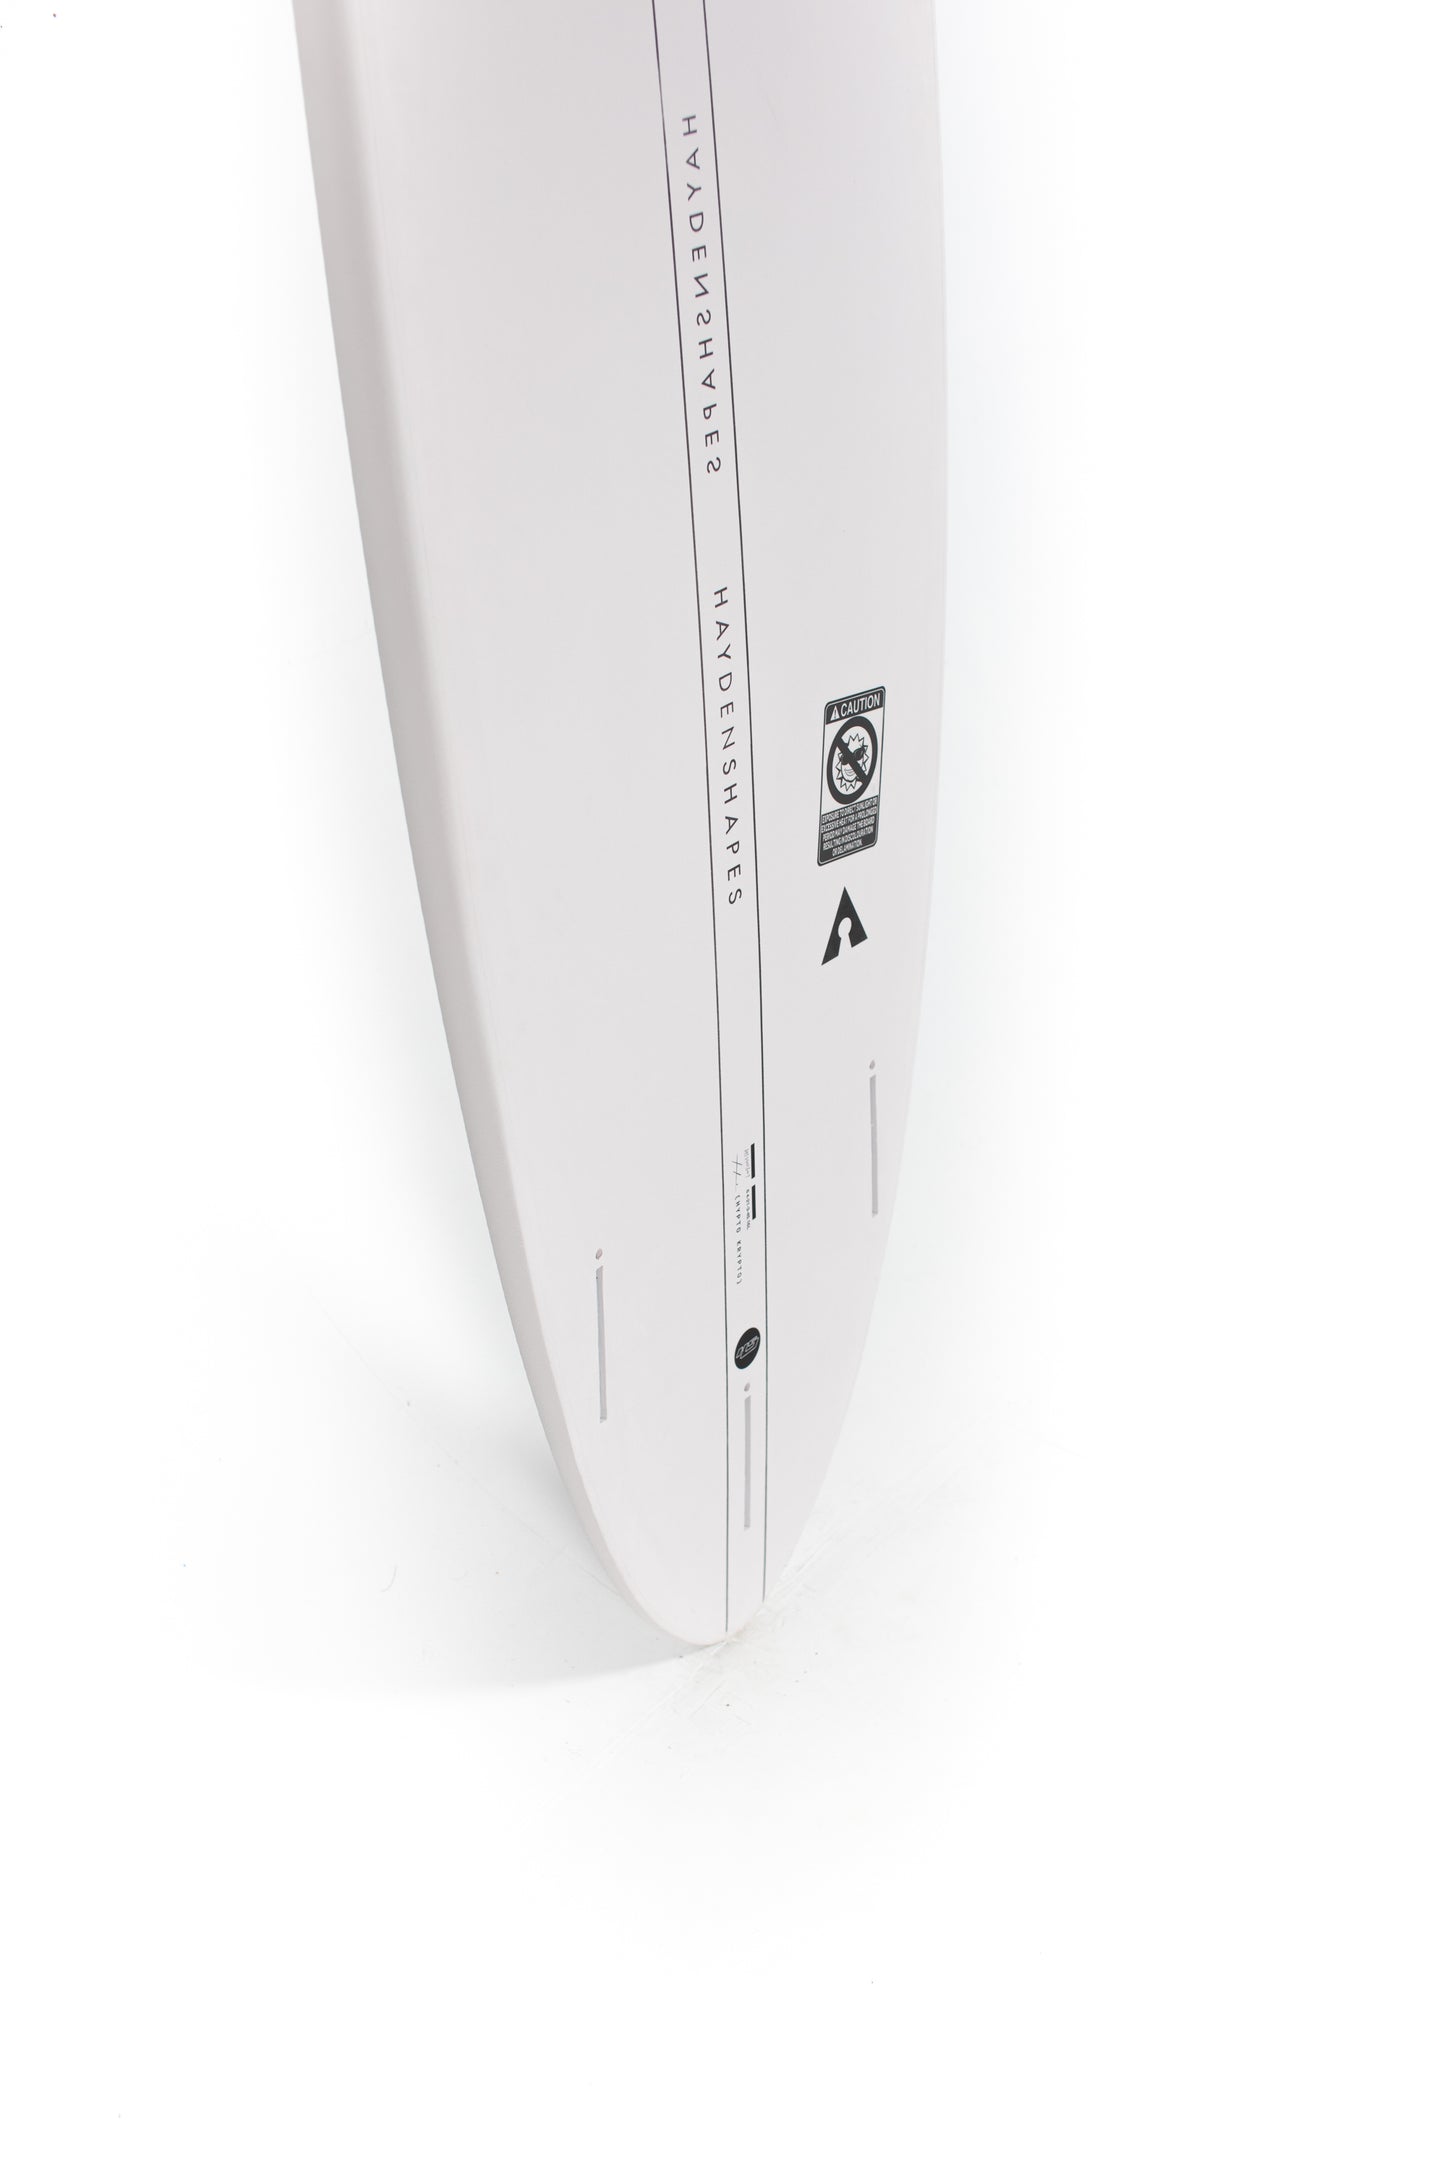 
                  
                    Pukas Surf Shop - HaydenShapes Surfboard - HYPTO KRYPTO SOFT - 6'4" x 21" x 3" x 45.16L - SOFTHK-DUST-FU
                  
                